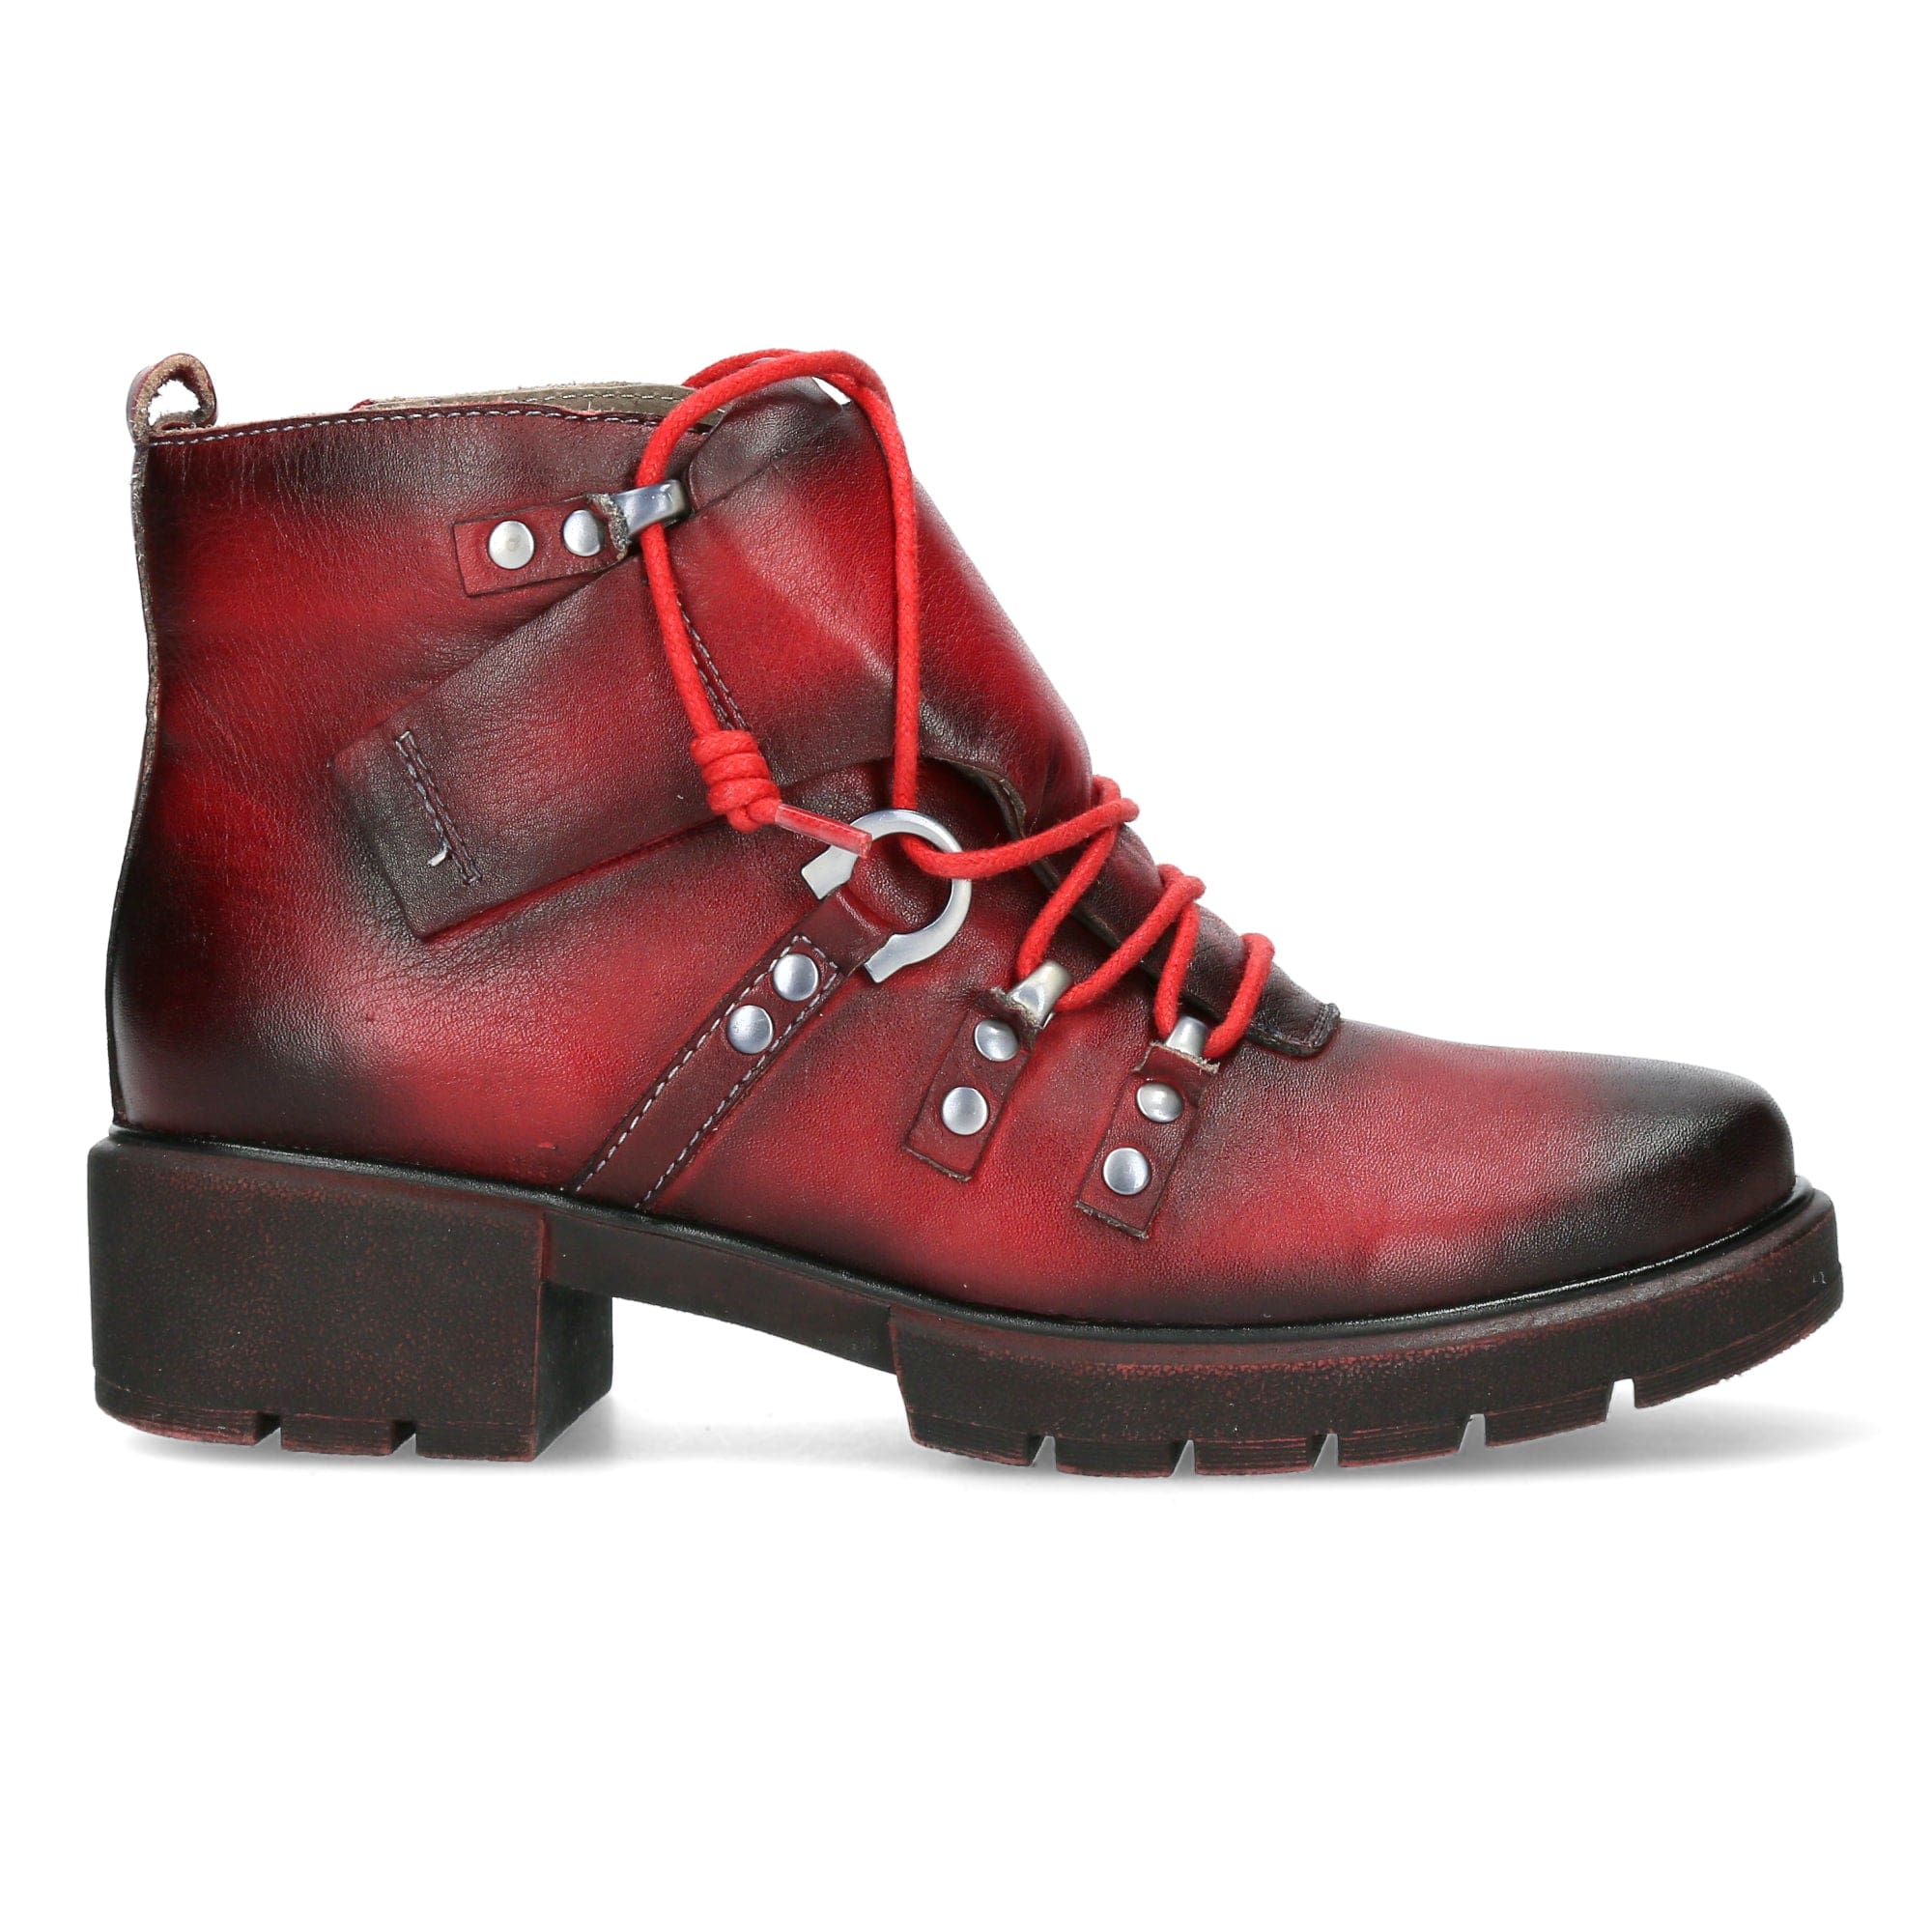 IDCEAO 06 - 35 / Red - Boots